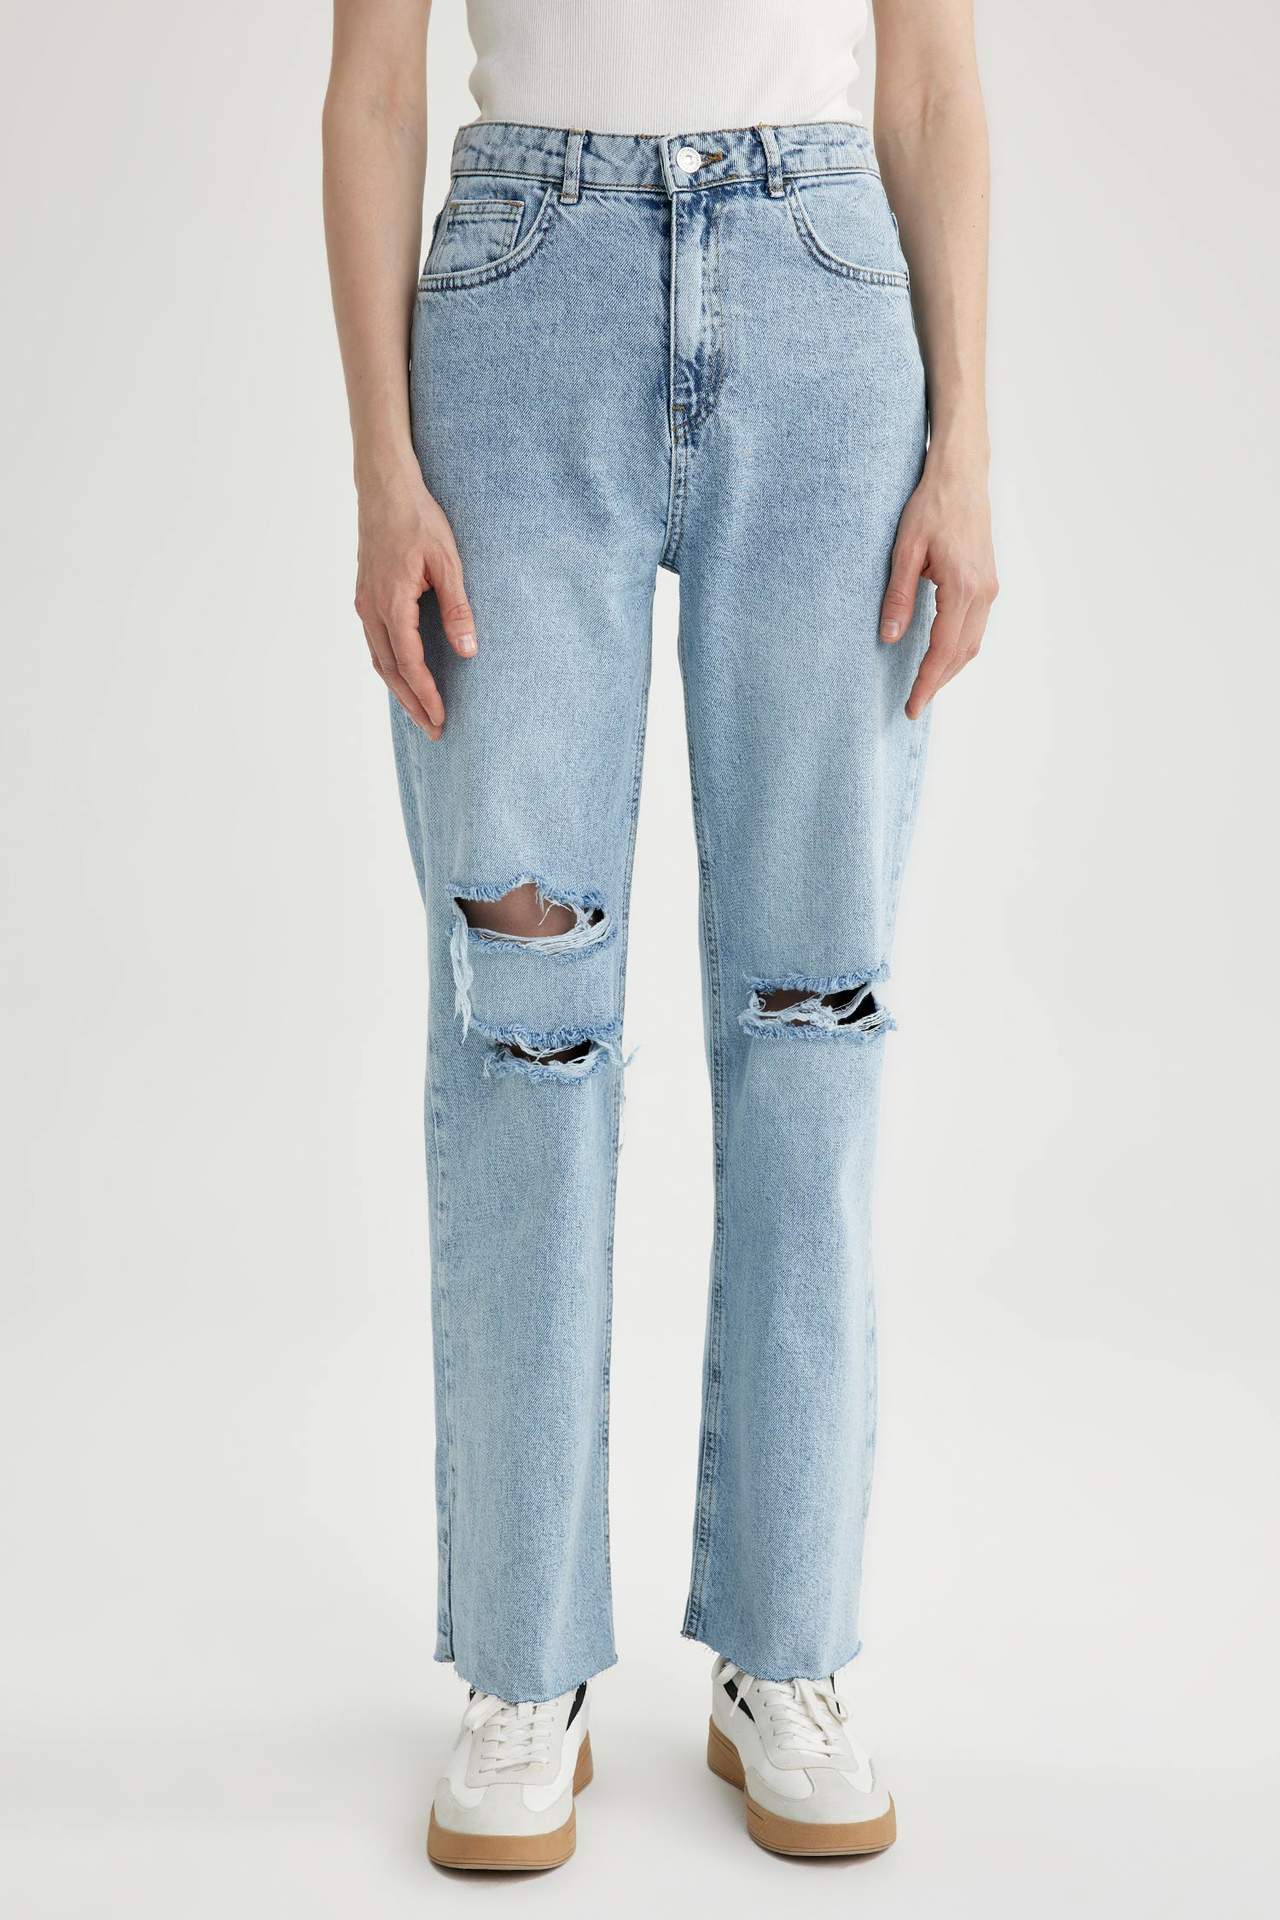 Women's jeans DEFACTO